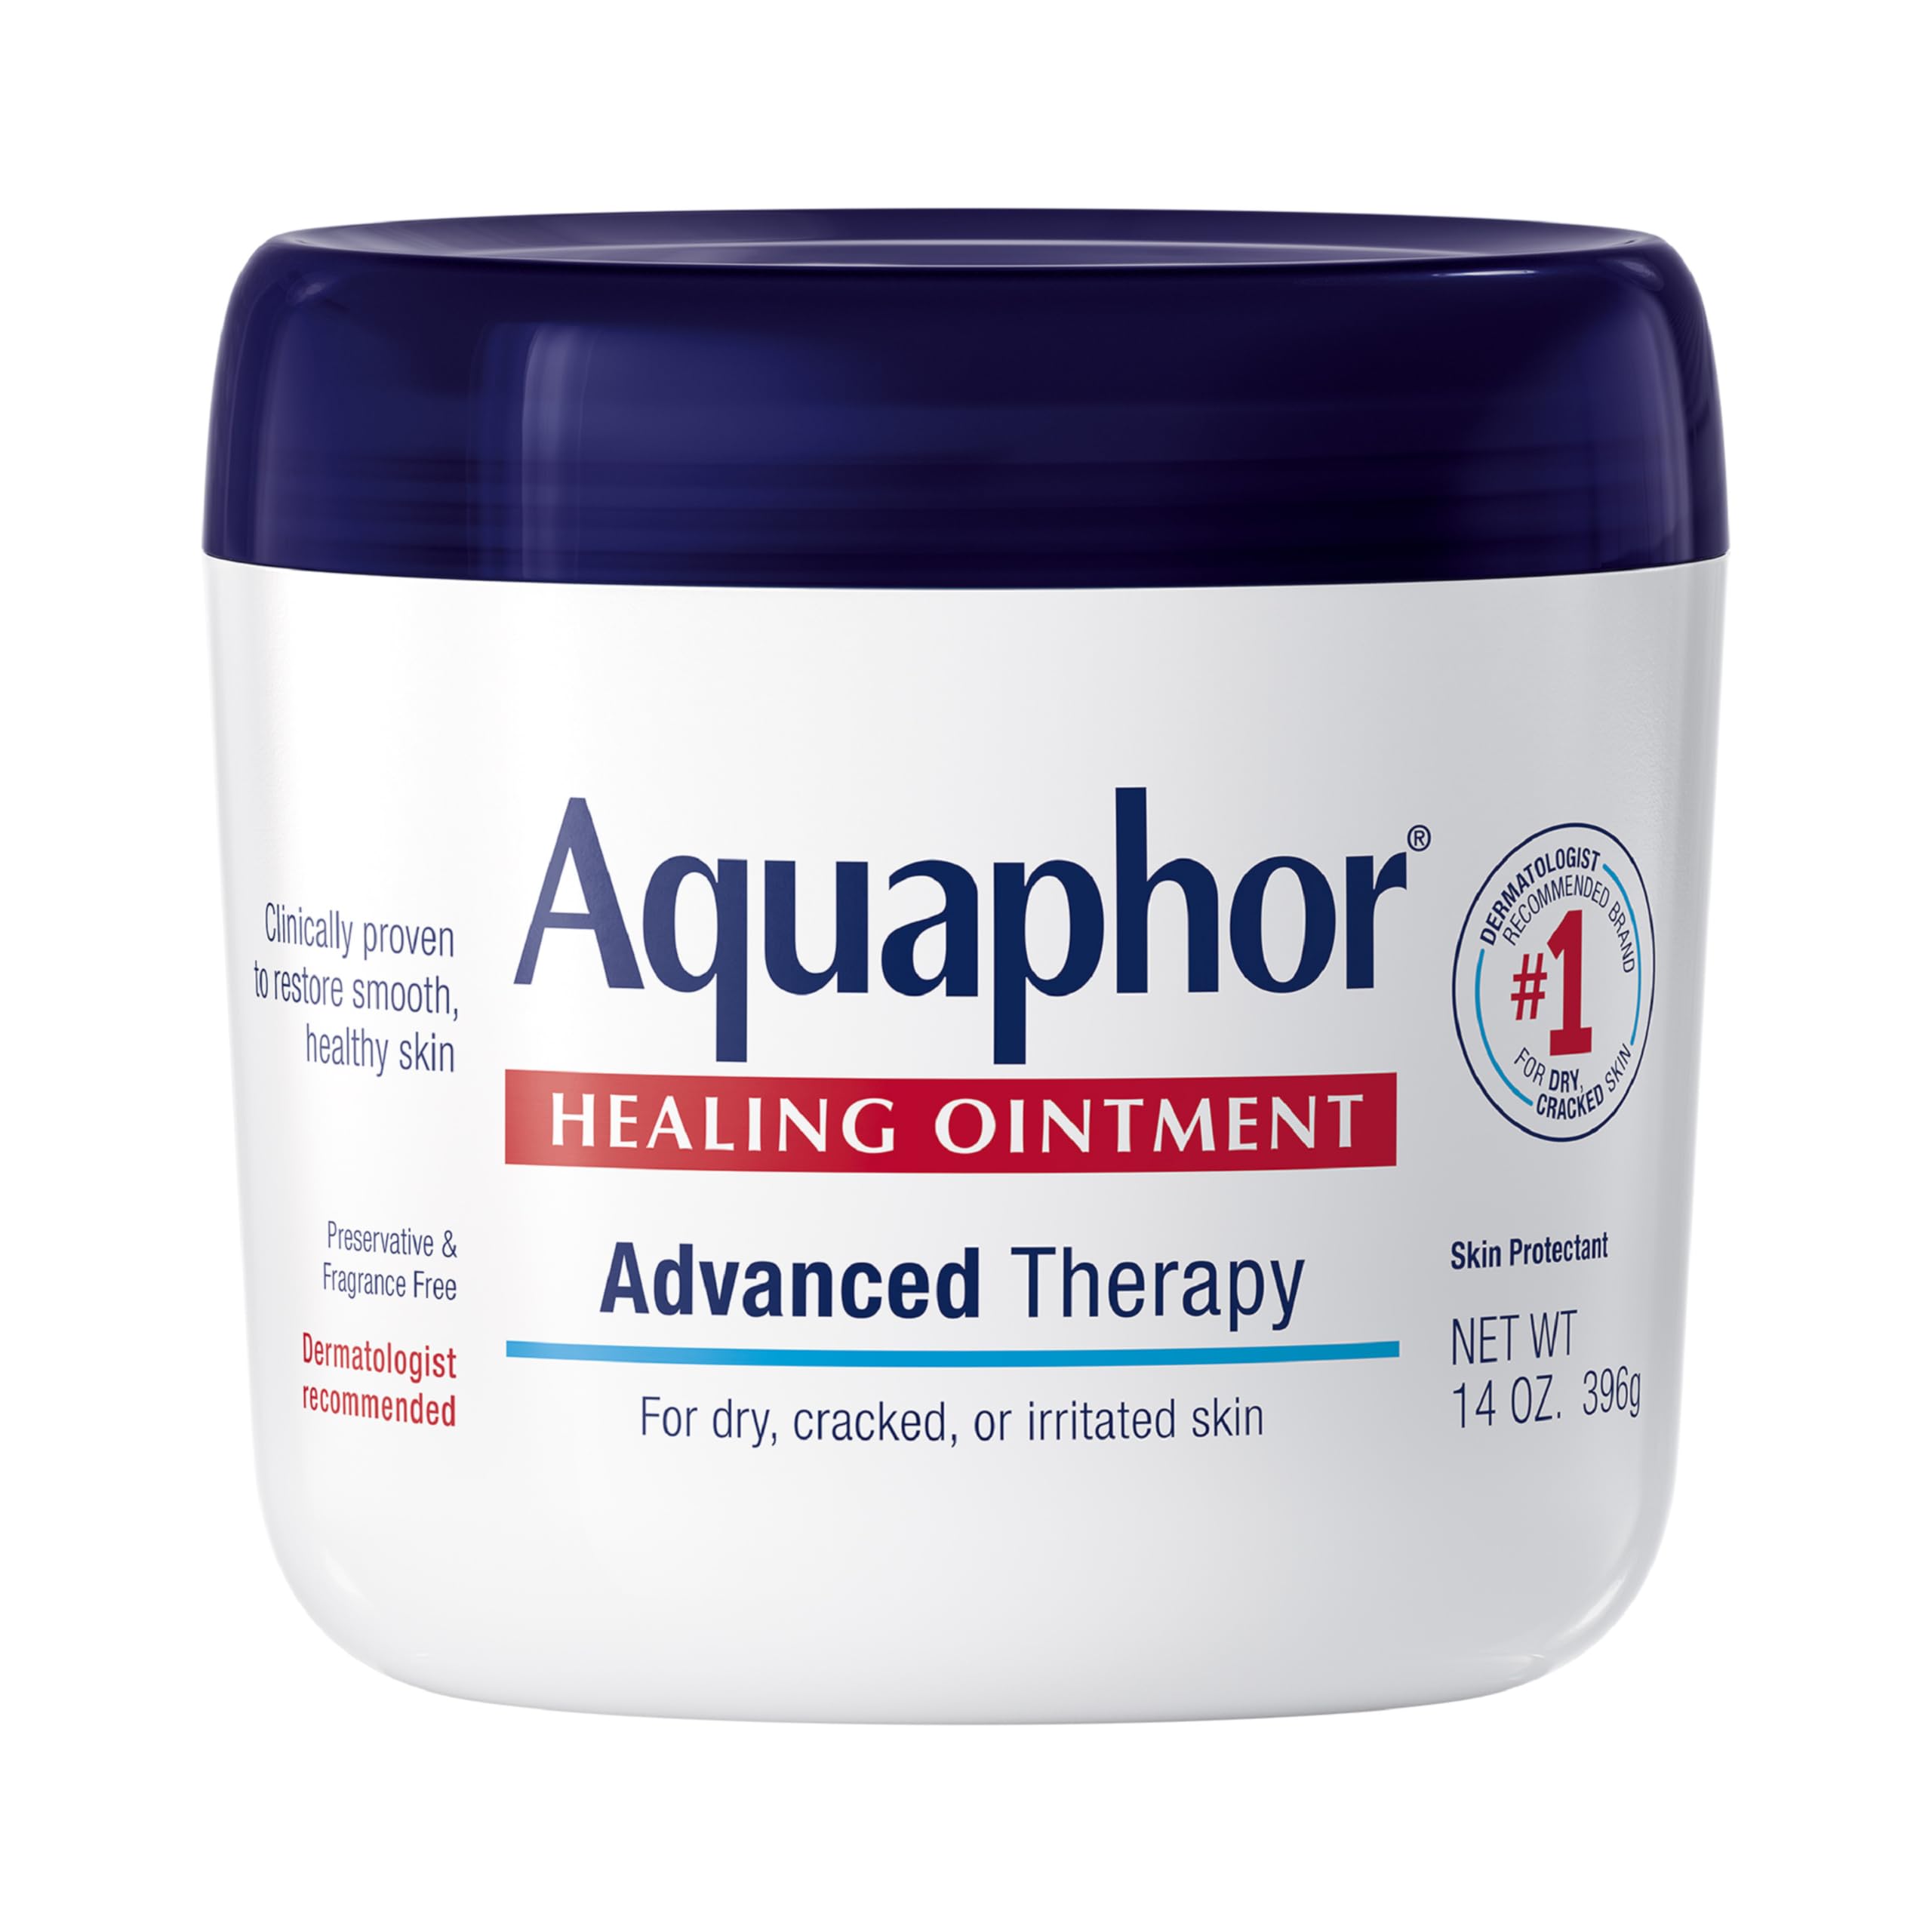 Aquaphor Advanced Therapy Healing Ointment, 14 oz by Aquaphor